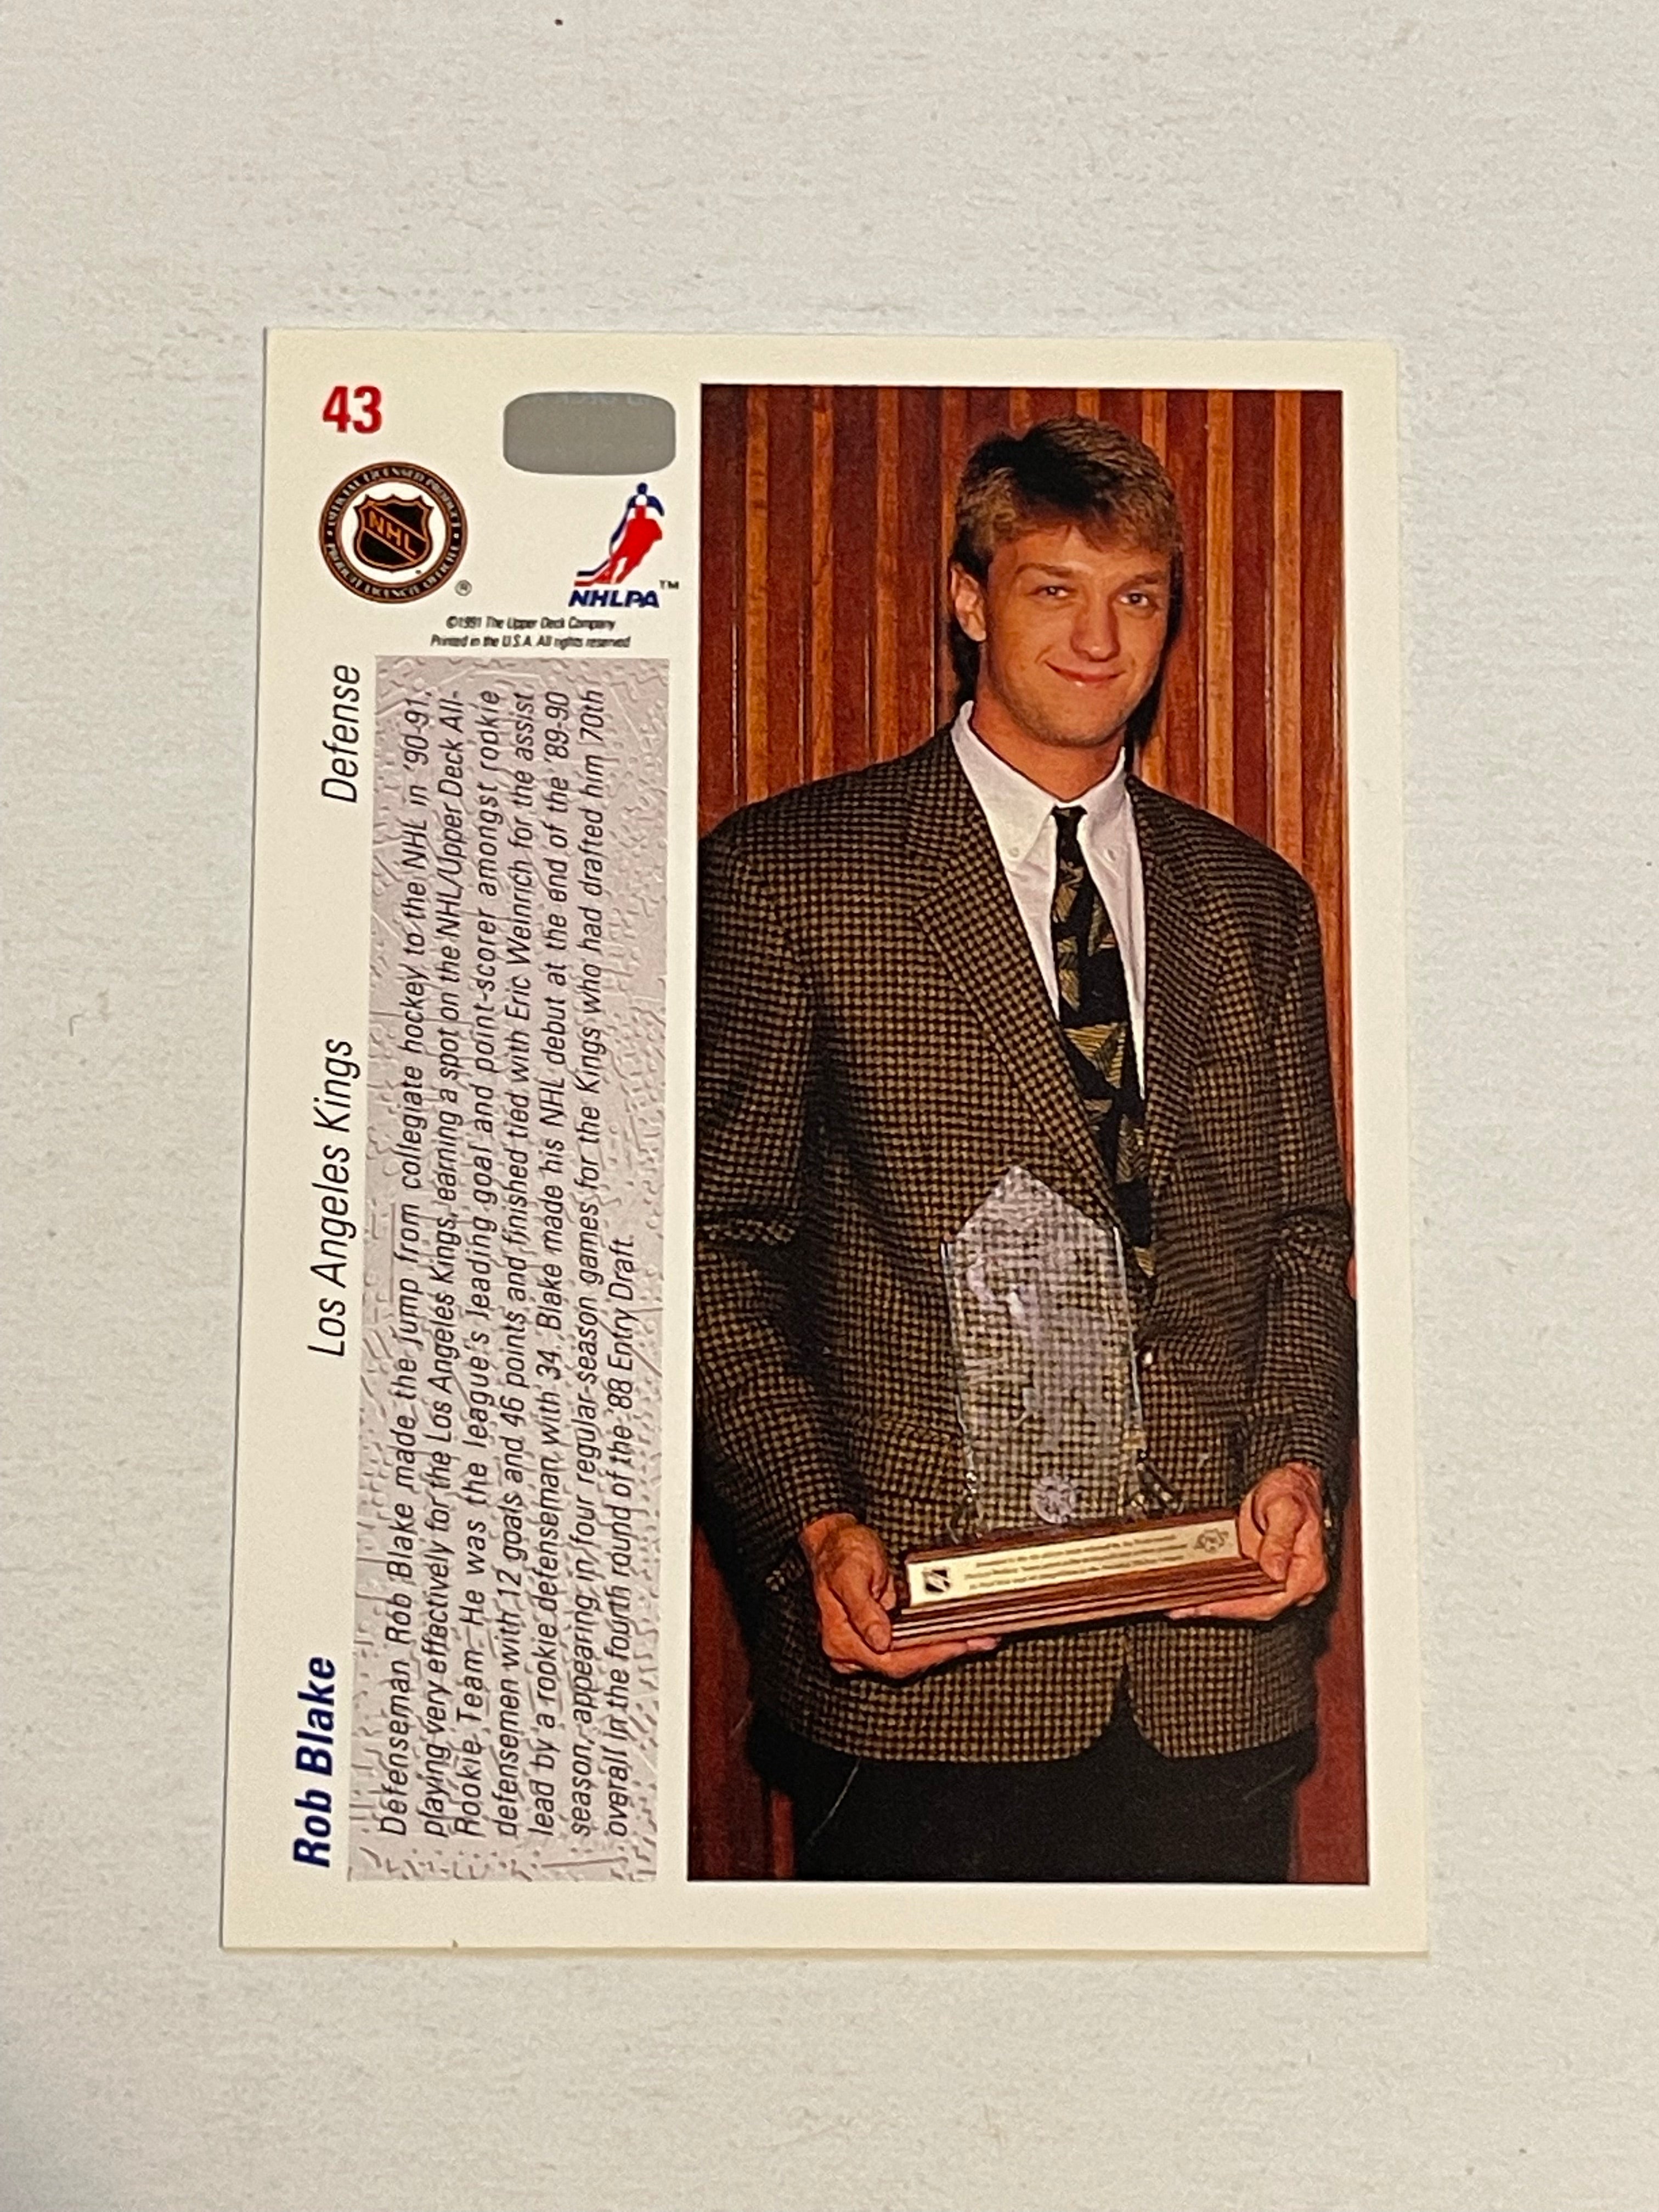 Rob Blake autograph hockey card with COA